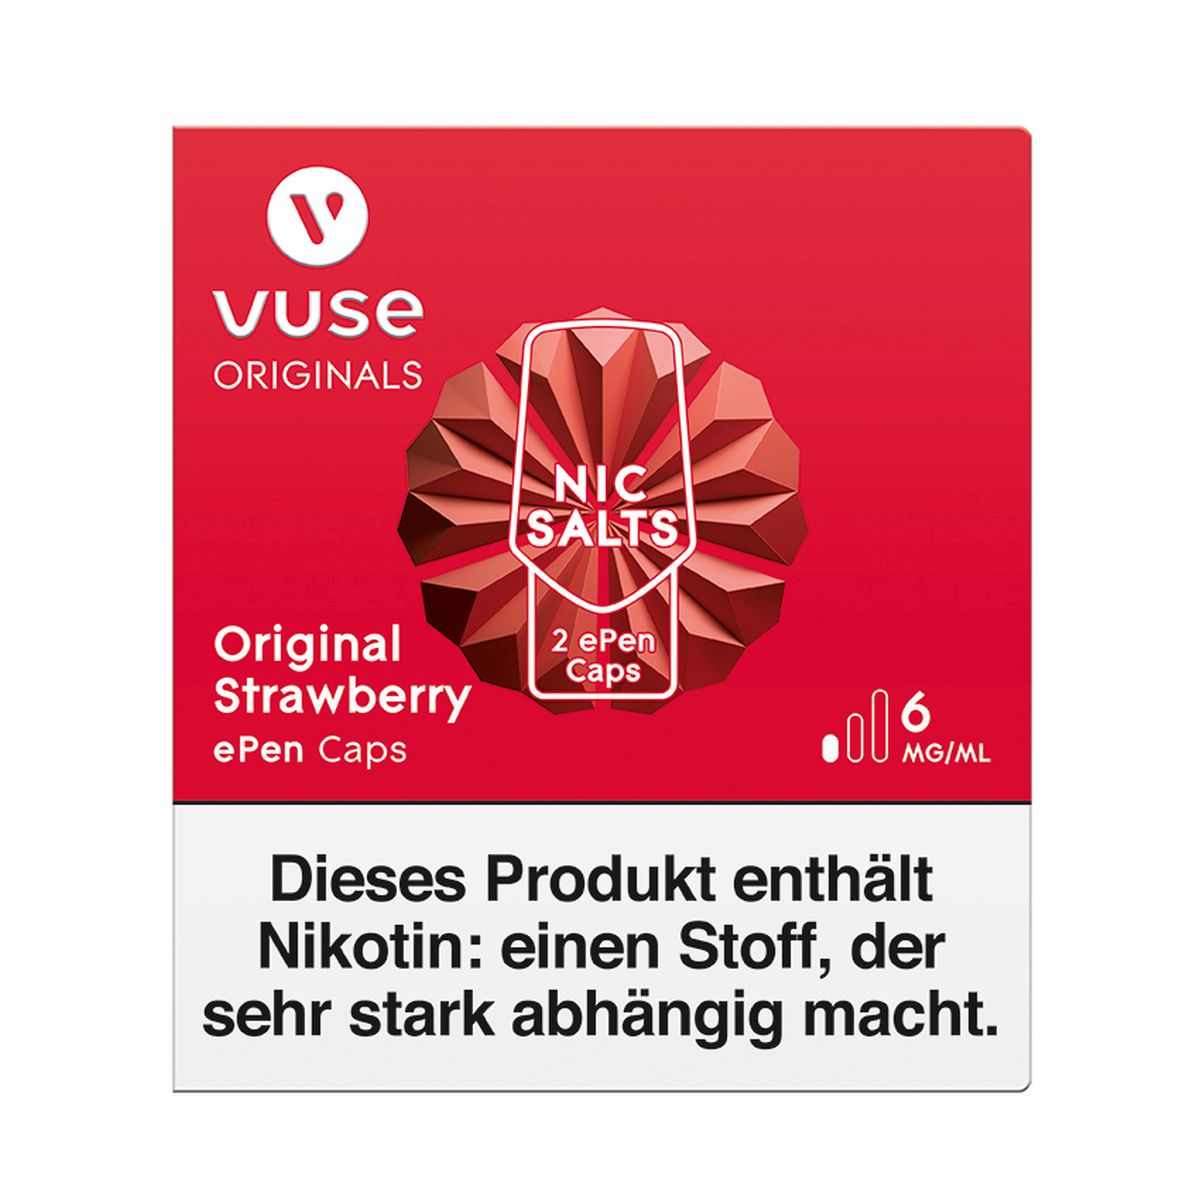 Vuse Vuse ePen Caps Original Strawberry Nic Salts 6mg Nikotin 2ml bei www.Tabakring.de kaufen